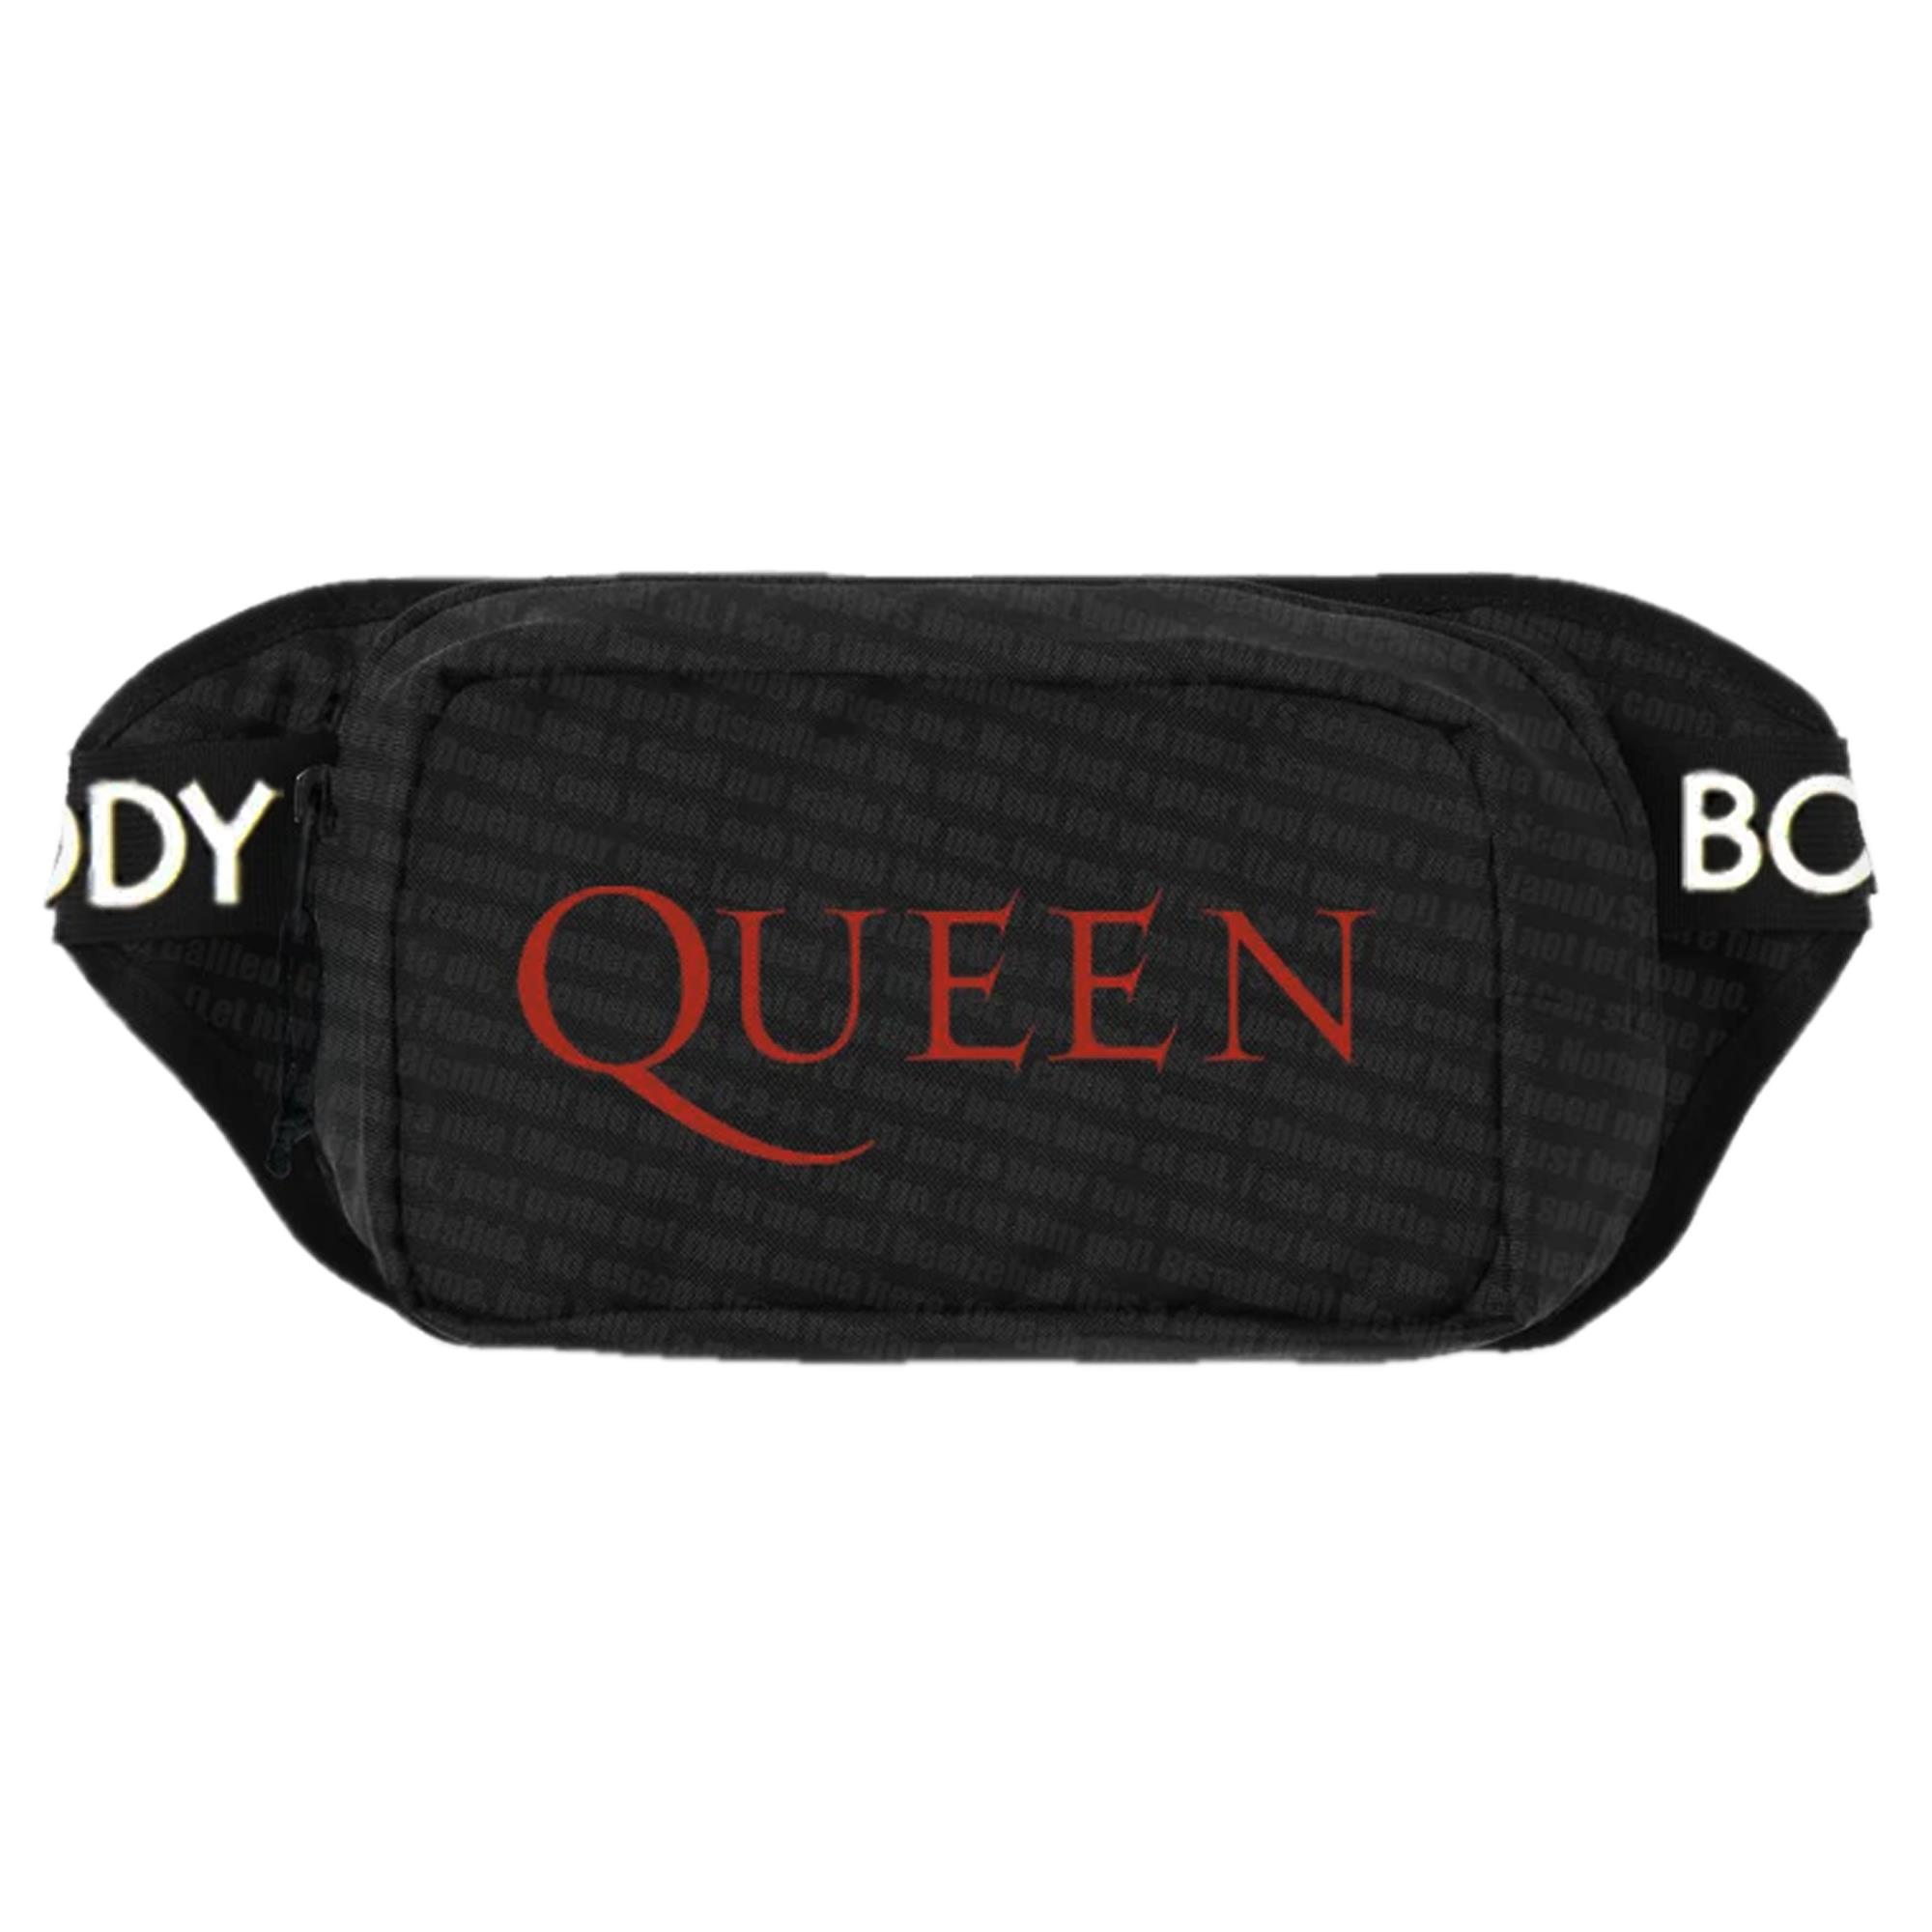 Bohemian Rhapsody Shoulder Bag